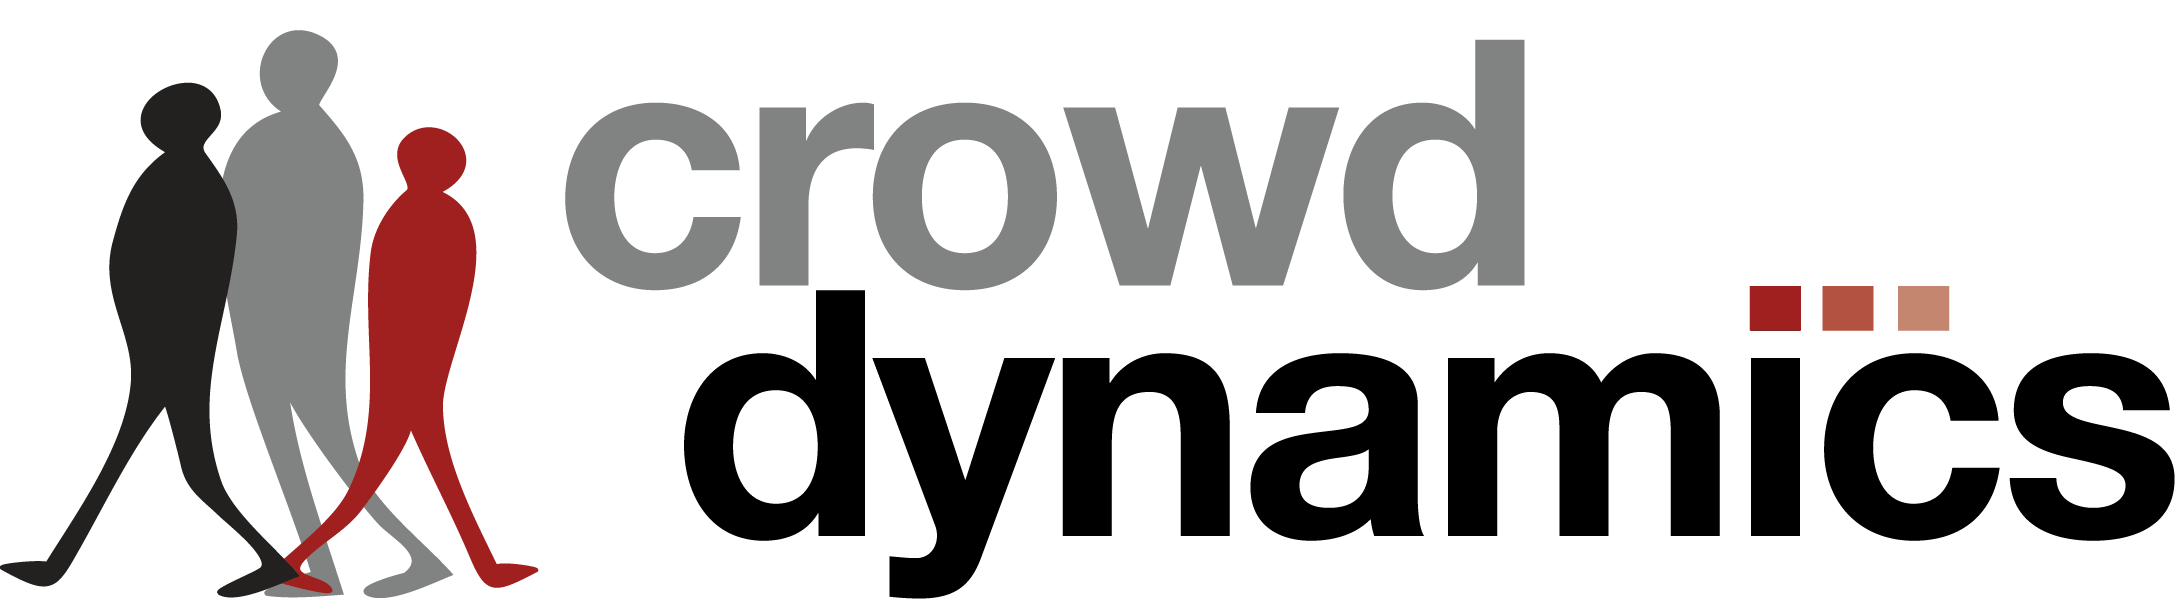 Crowd Dynamics logo